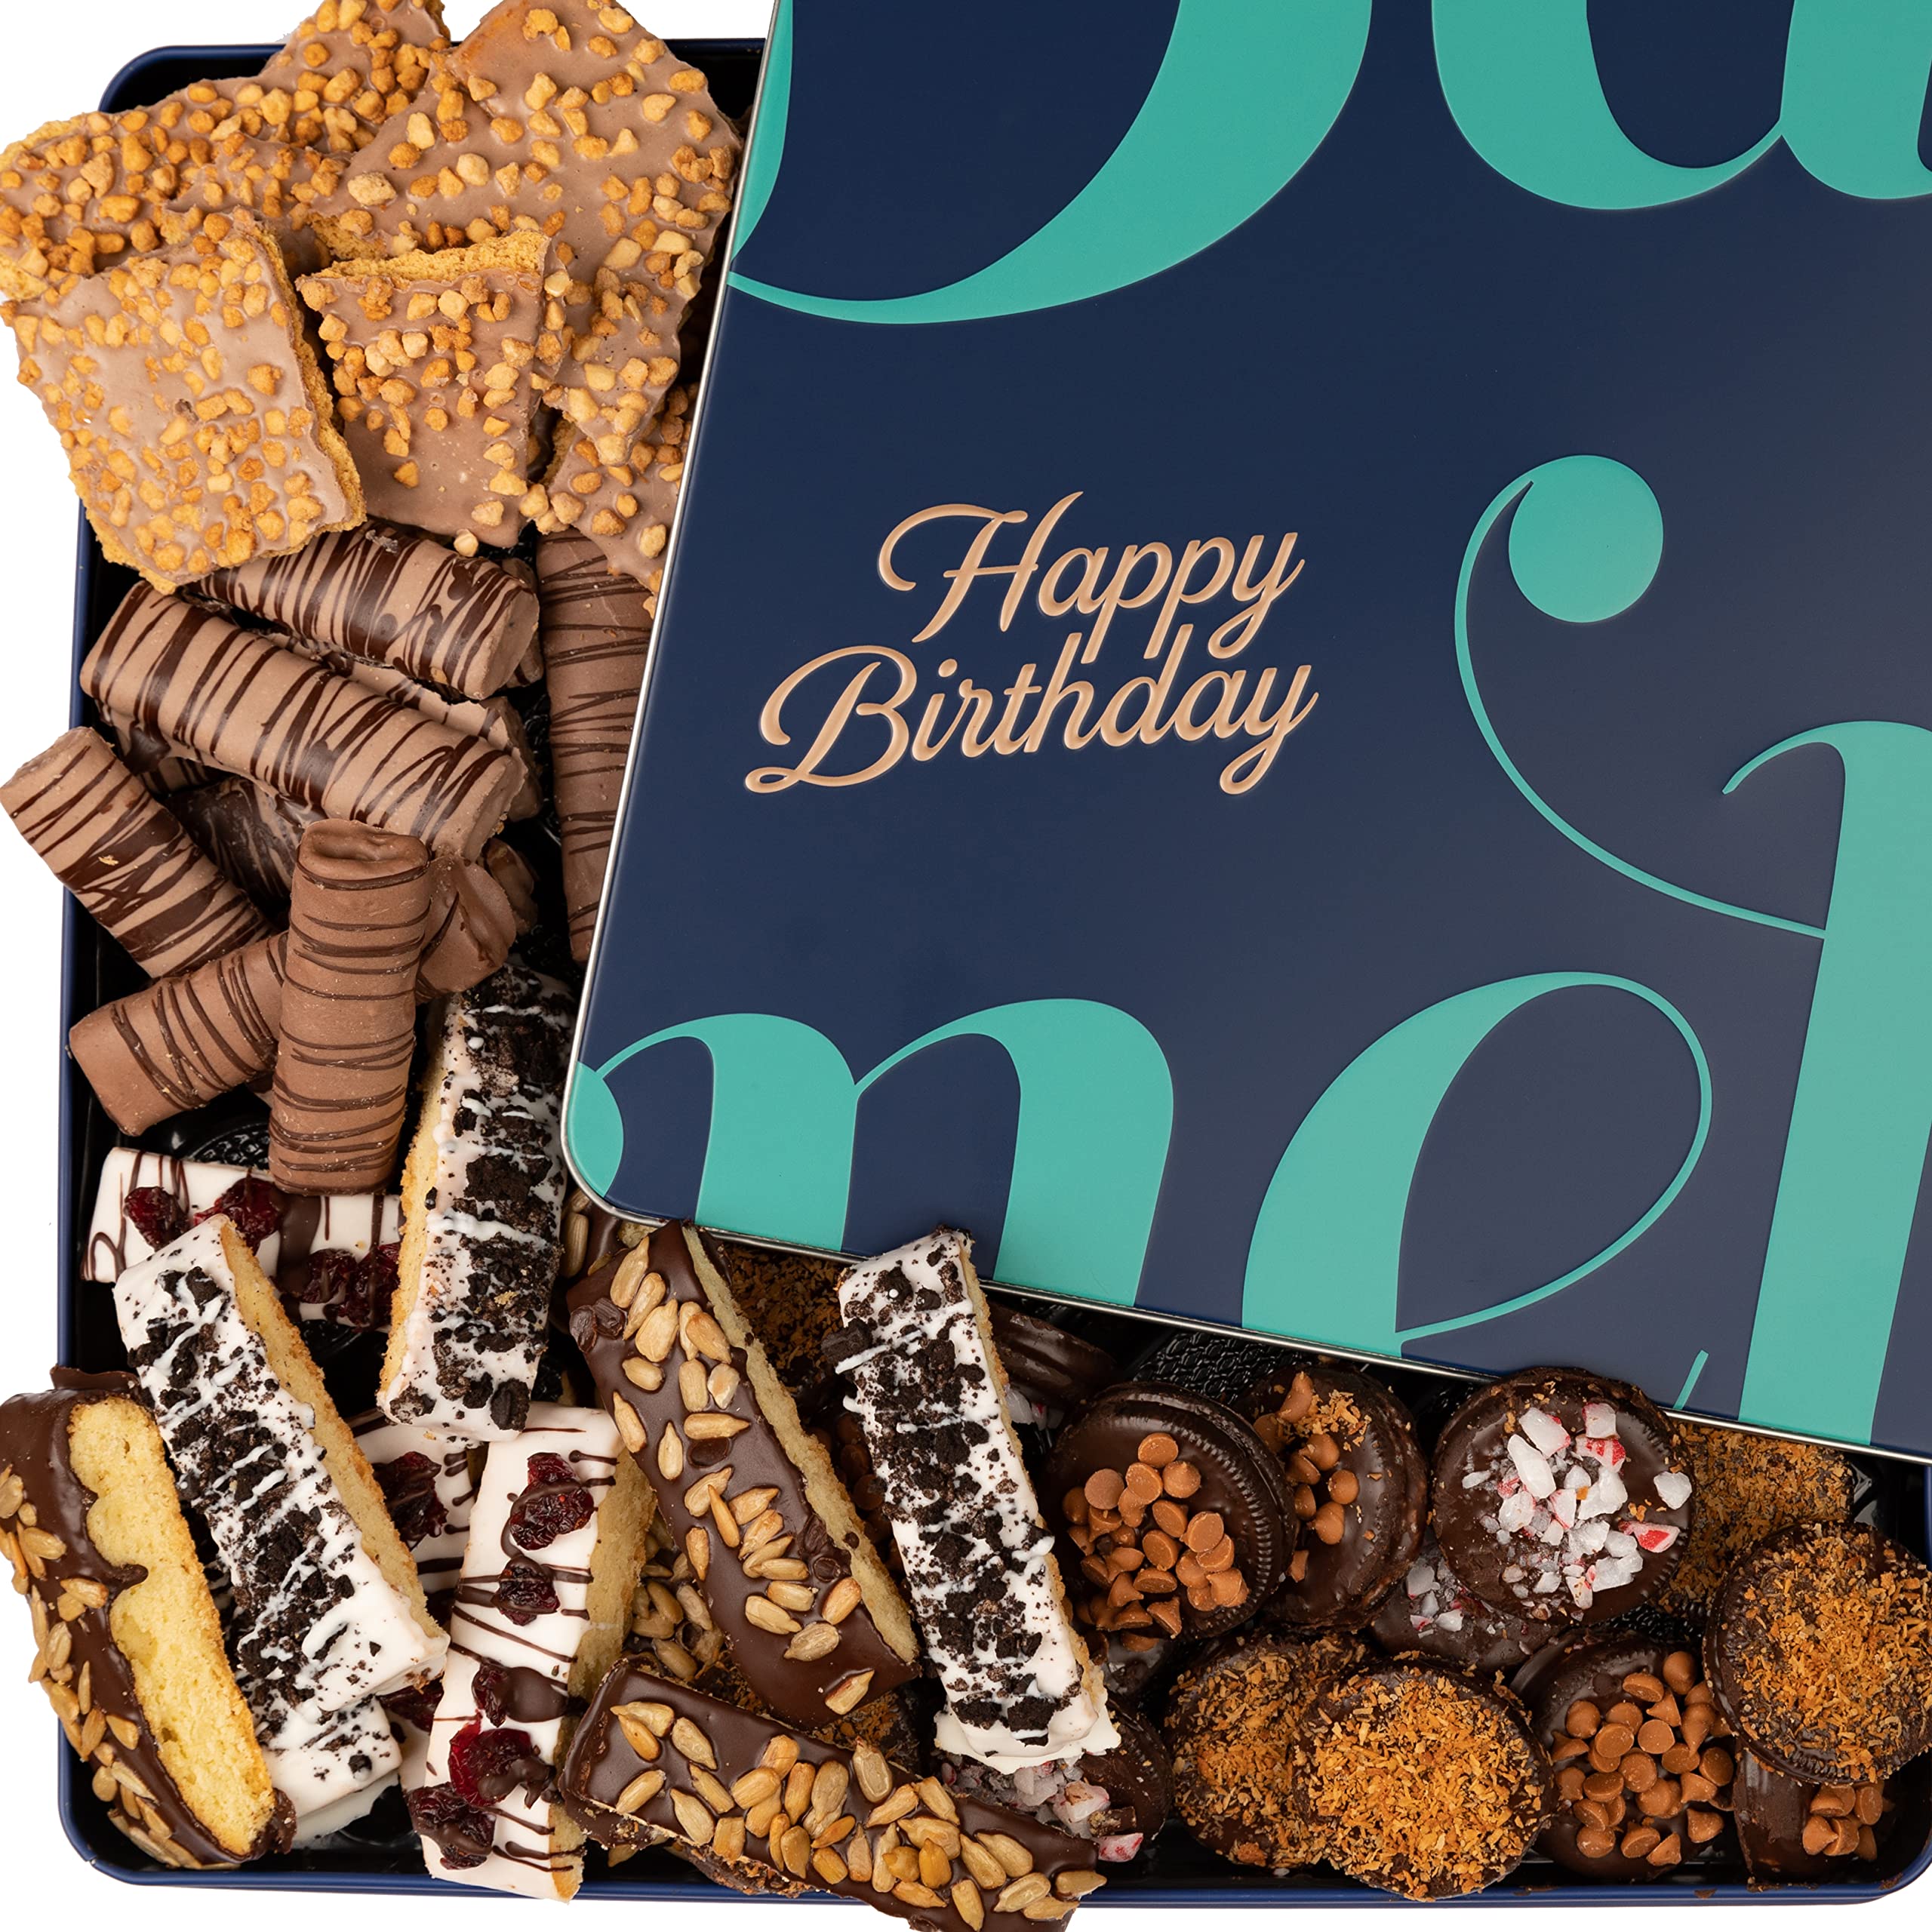 Sparkling Wine Chocolates And Snacks - Birthday Chocolate Hamper Delivery  Tottori